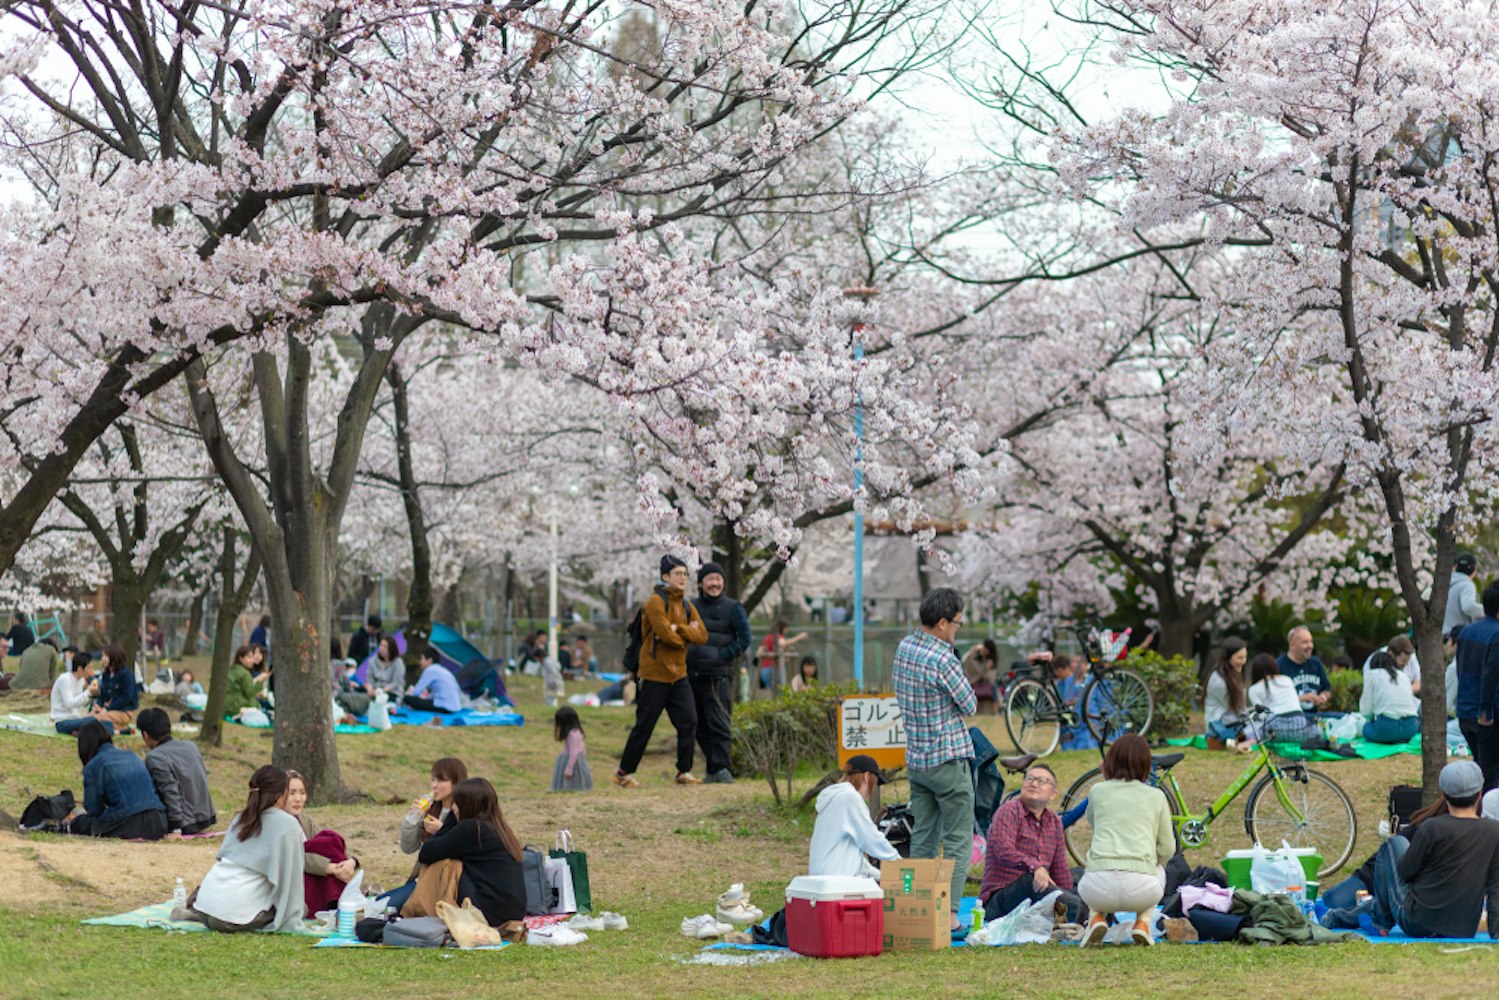 Japanese people are sitting for picnic and playing at the Kema Sakuranomiya Park